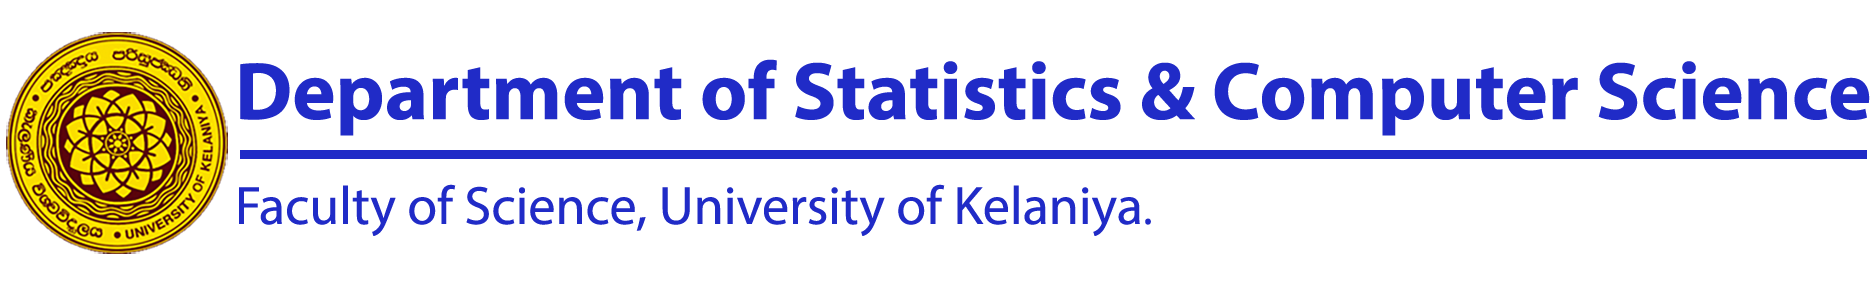 Department of Statistics & Computer Science